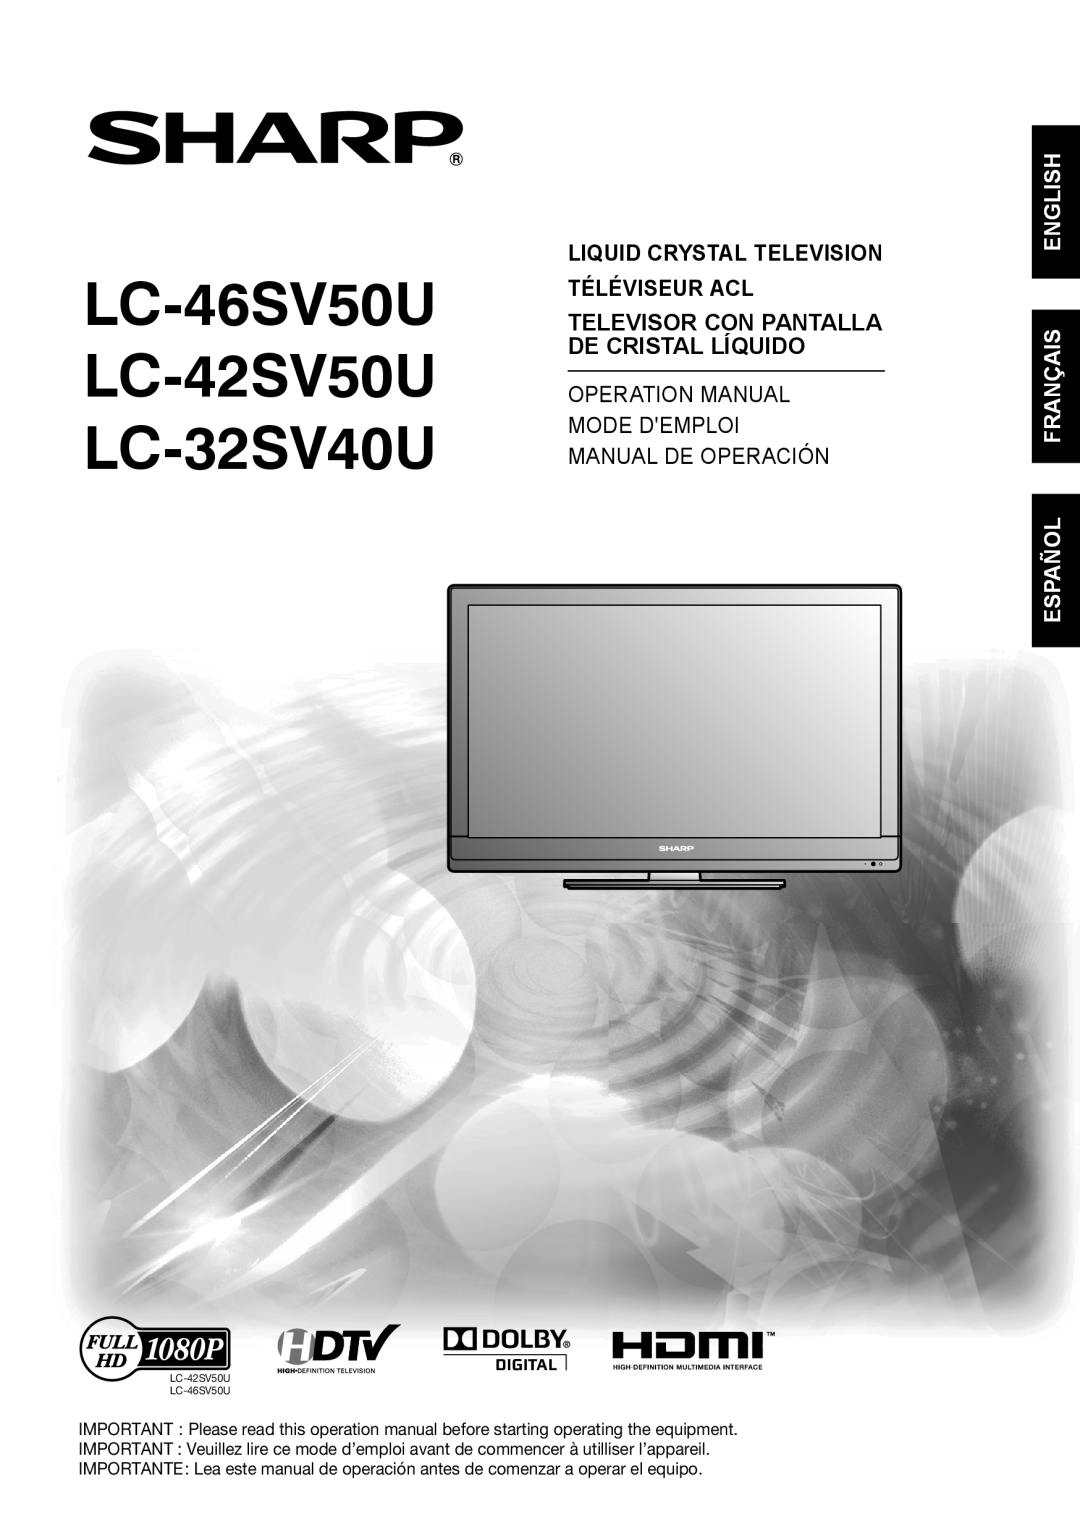 Sharp operation manual LC-46SV50U LC-42SV50U LC-32SV40U, Liquid Crystal Television Téléviseur Acl 